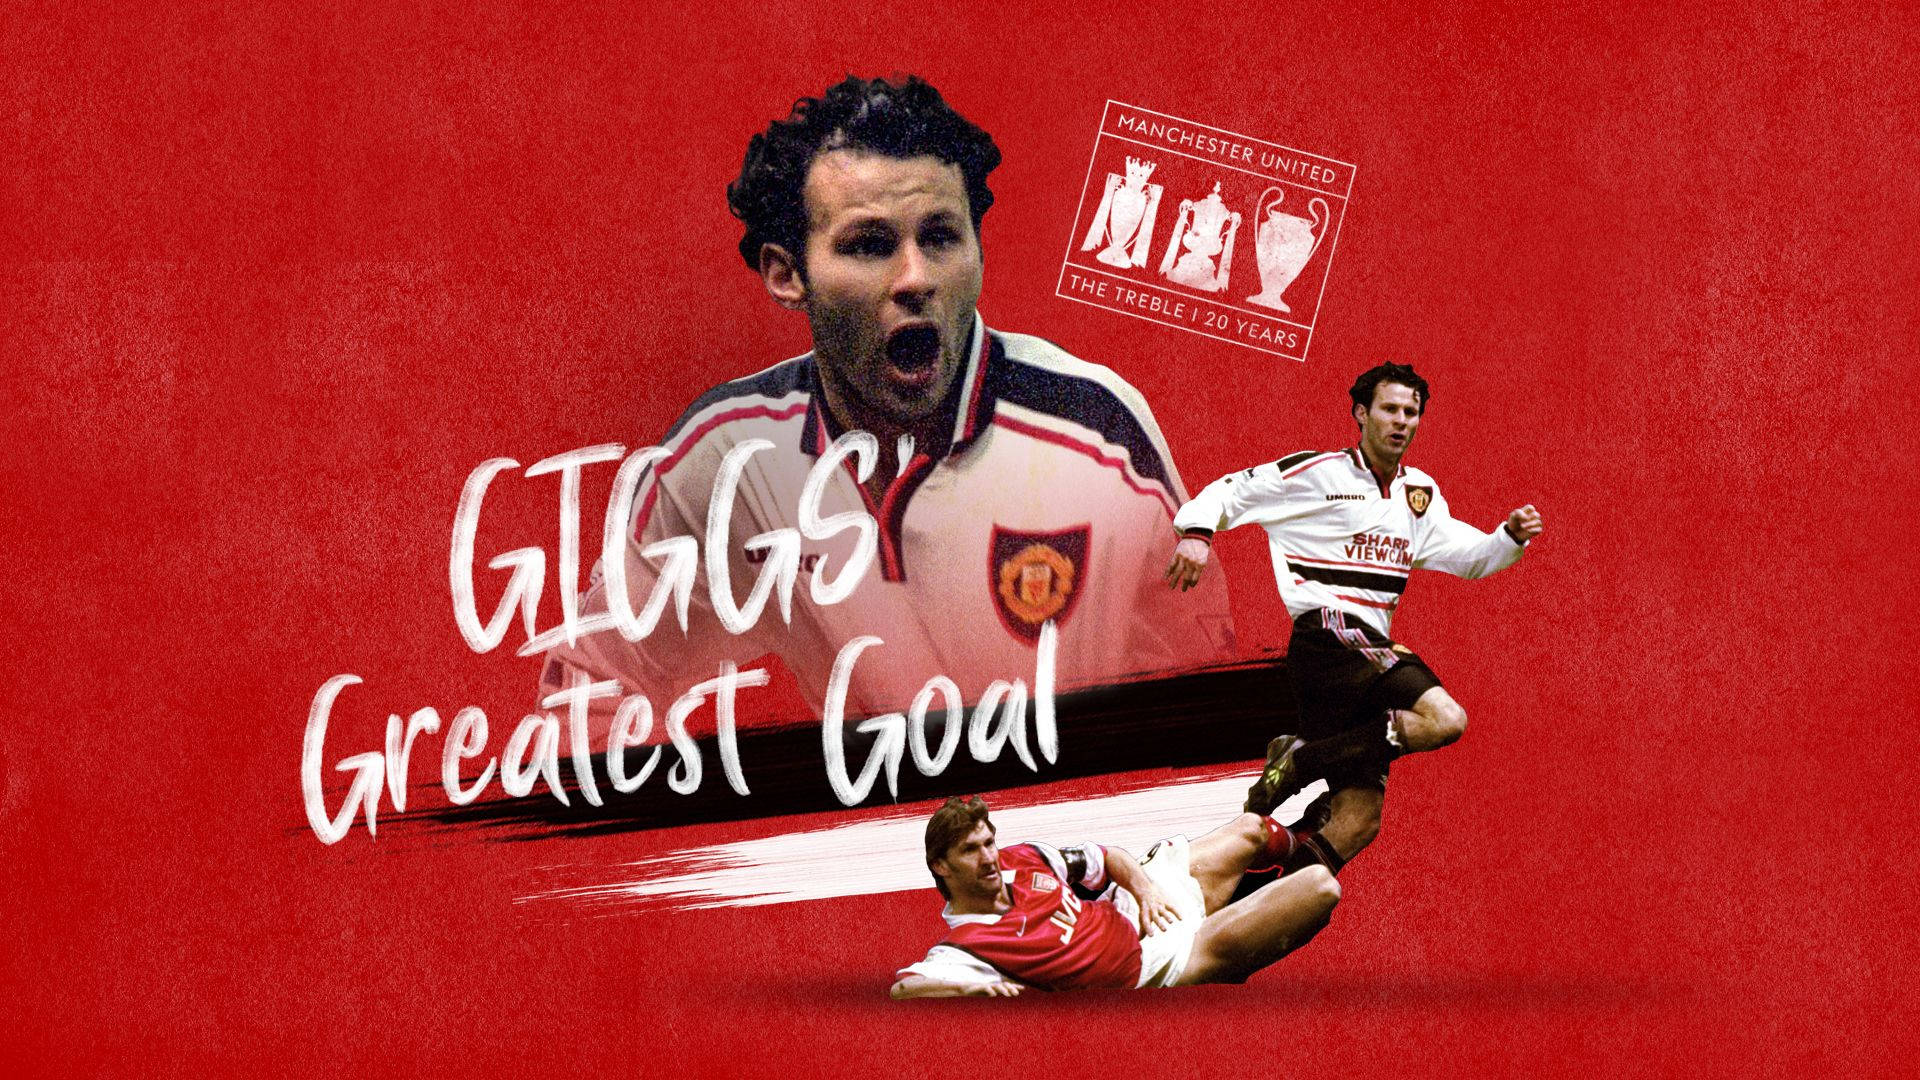 Ryan Giggs Greatest Goal Background